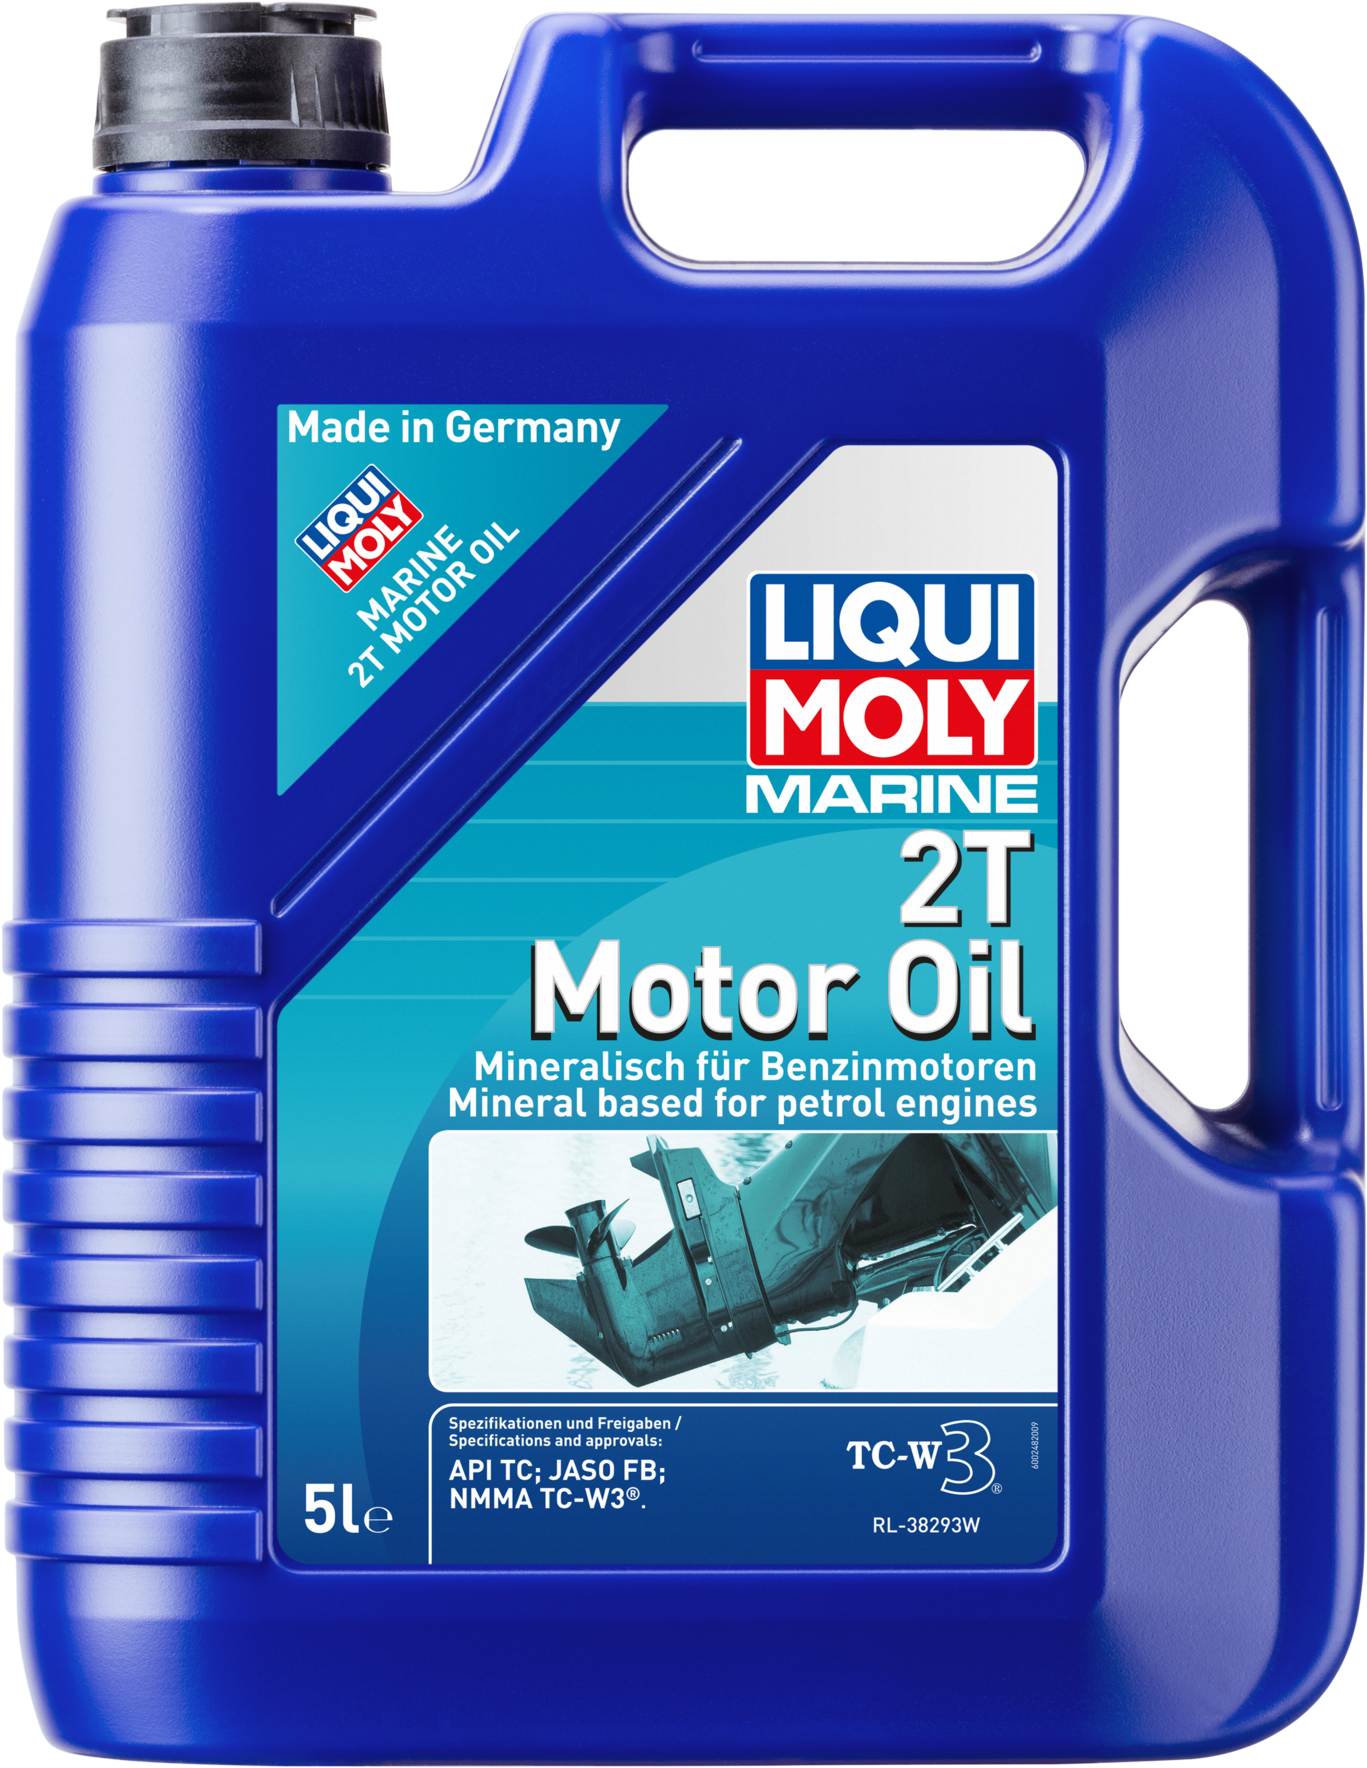 Liqui Moly Marine 2T Motor Oil, 5 lt